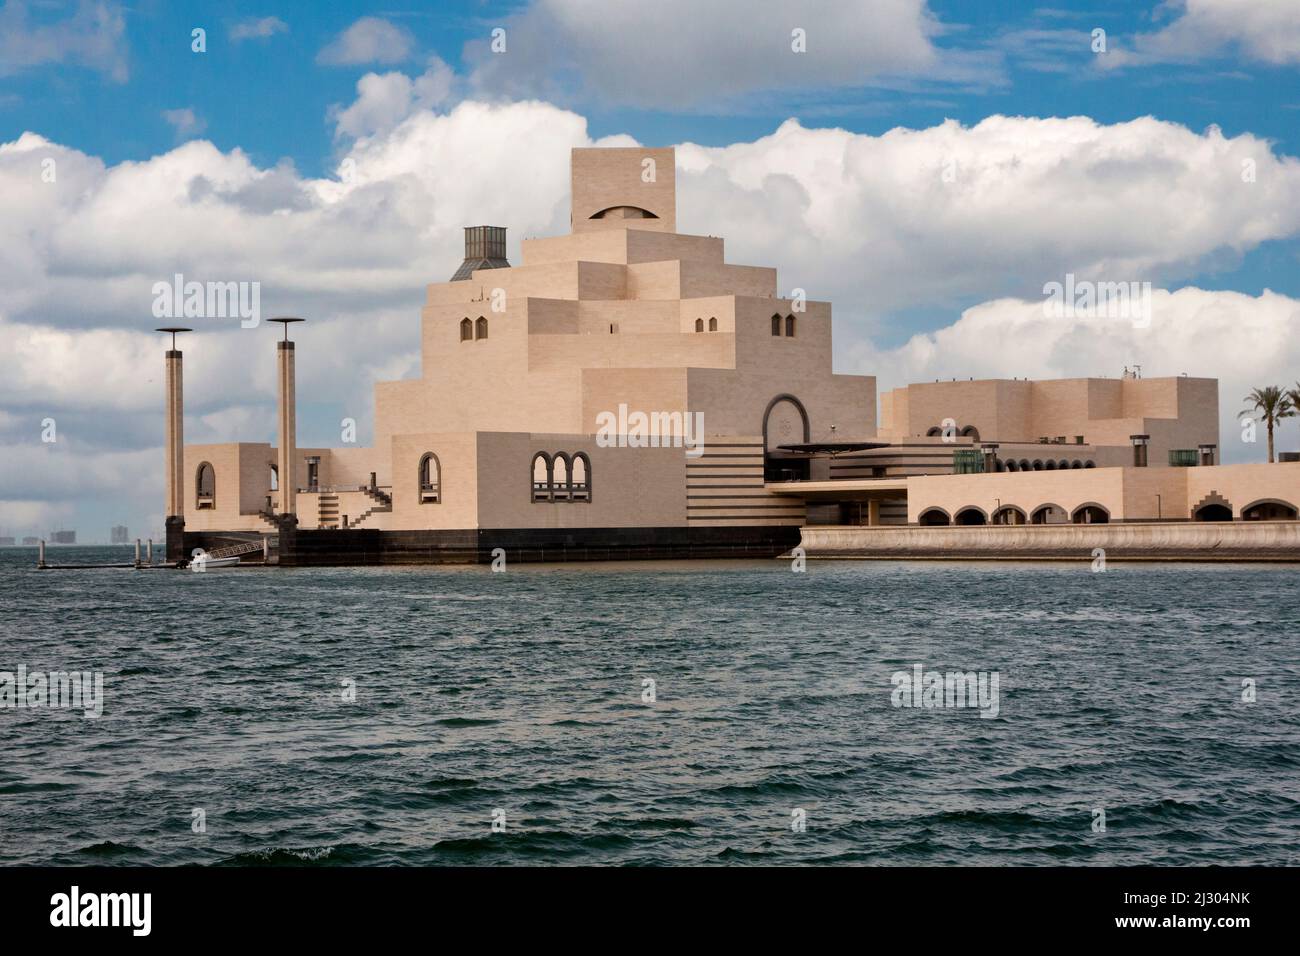 Doha, Qatar. Museum of Islamic Art, designed by architect I.M. Pei. Stock Photo